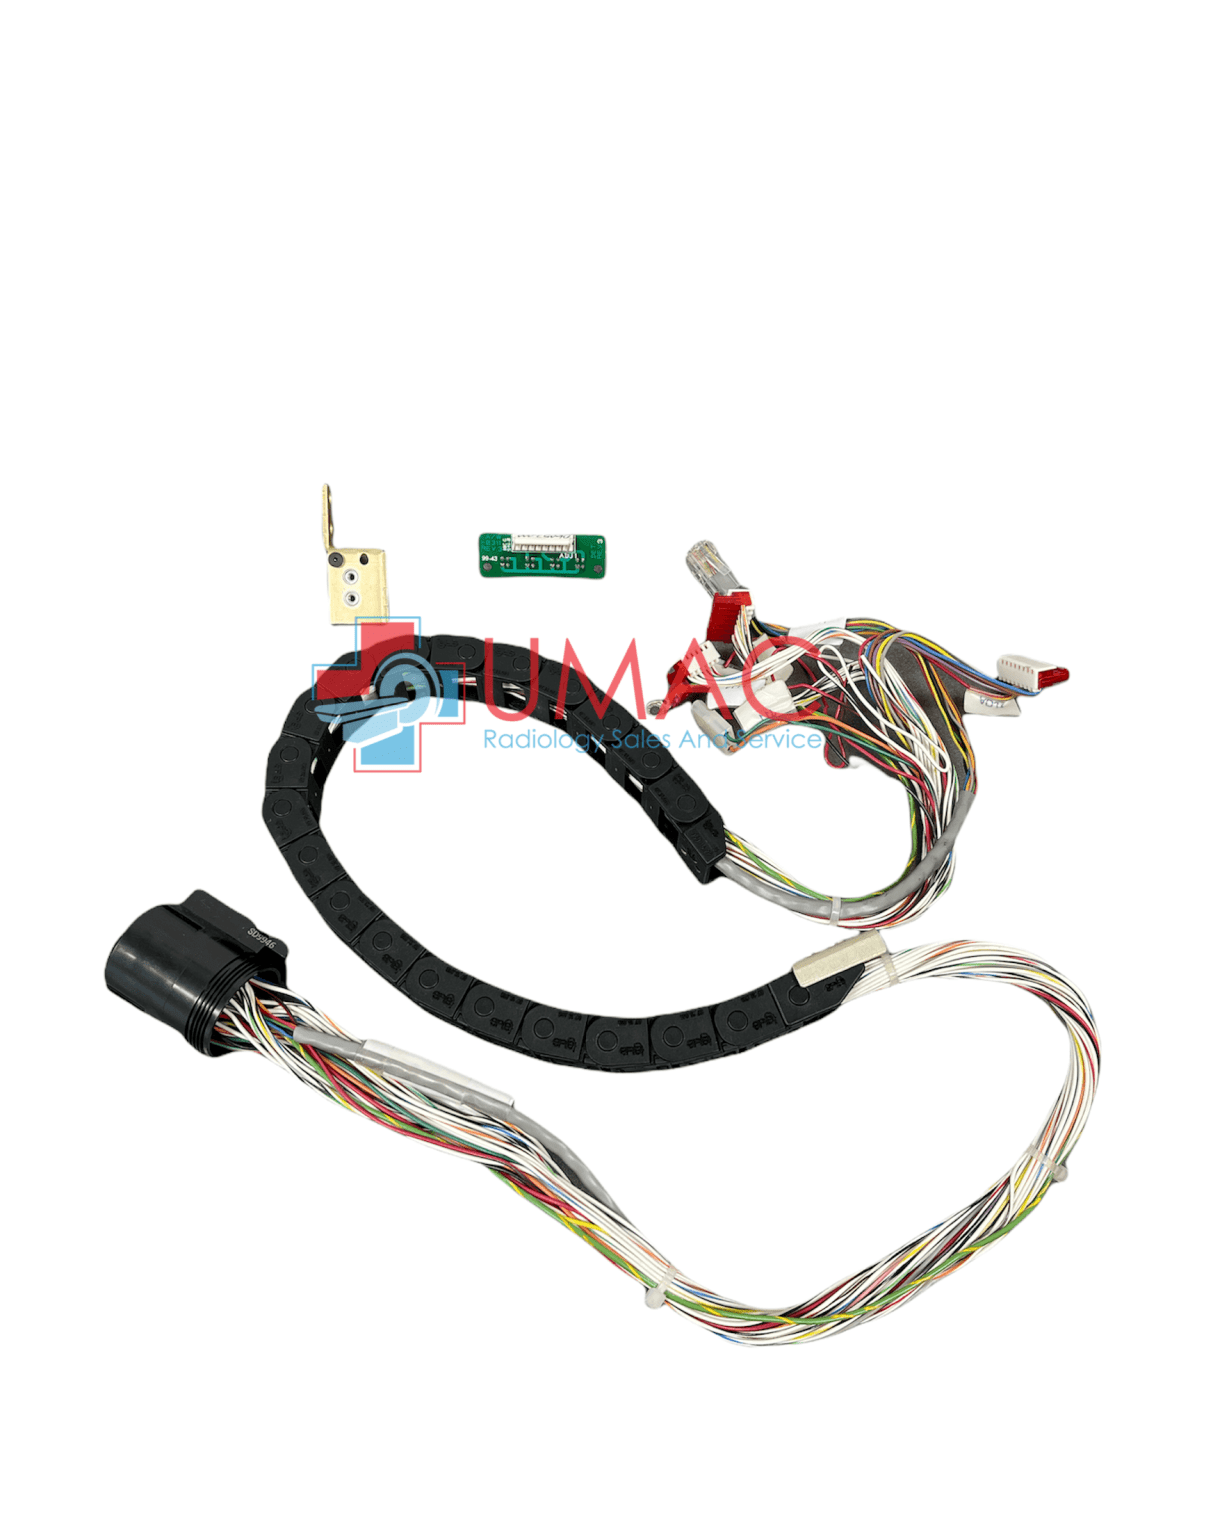 Hologic Lorad M-IV 9-200-0471 Cable Carr Assembly Kit